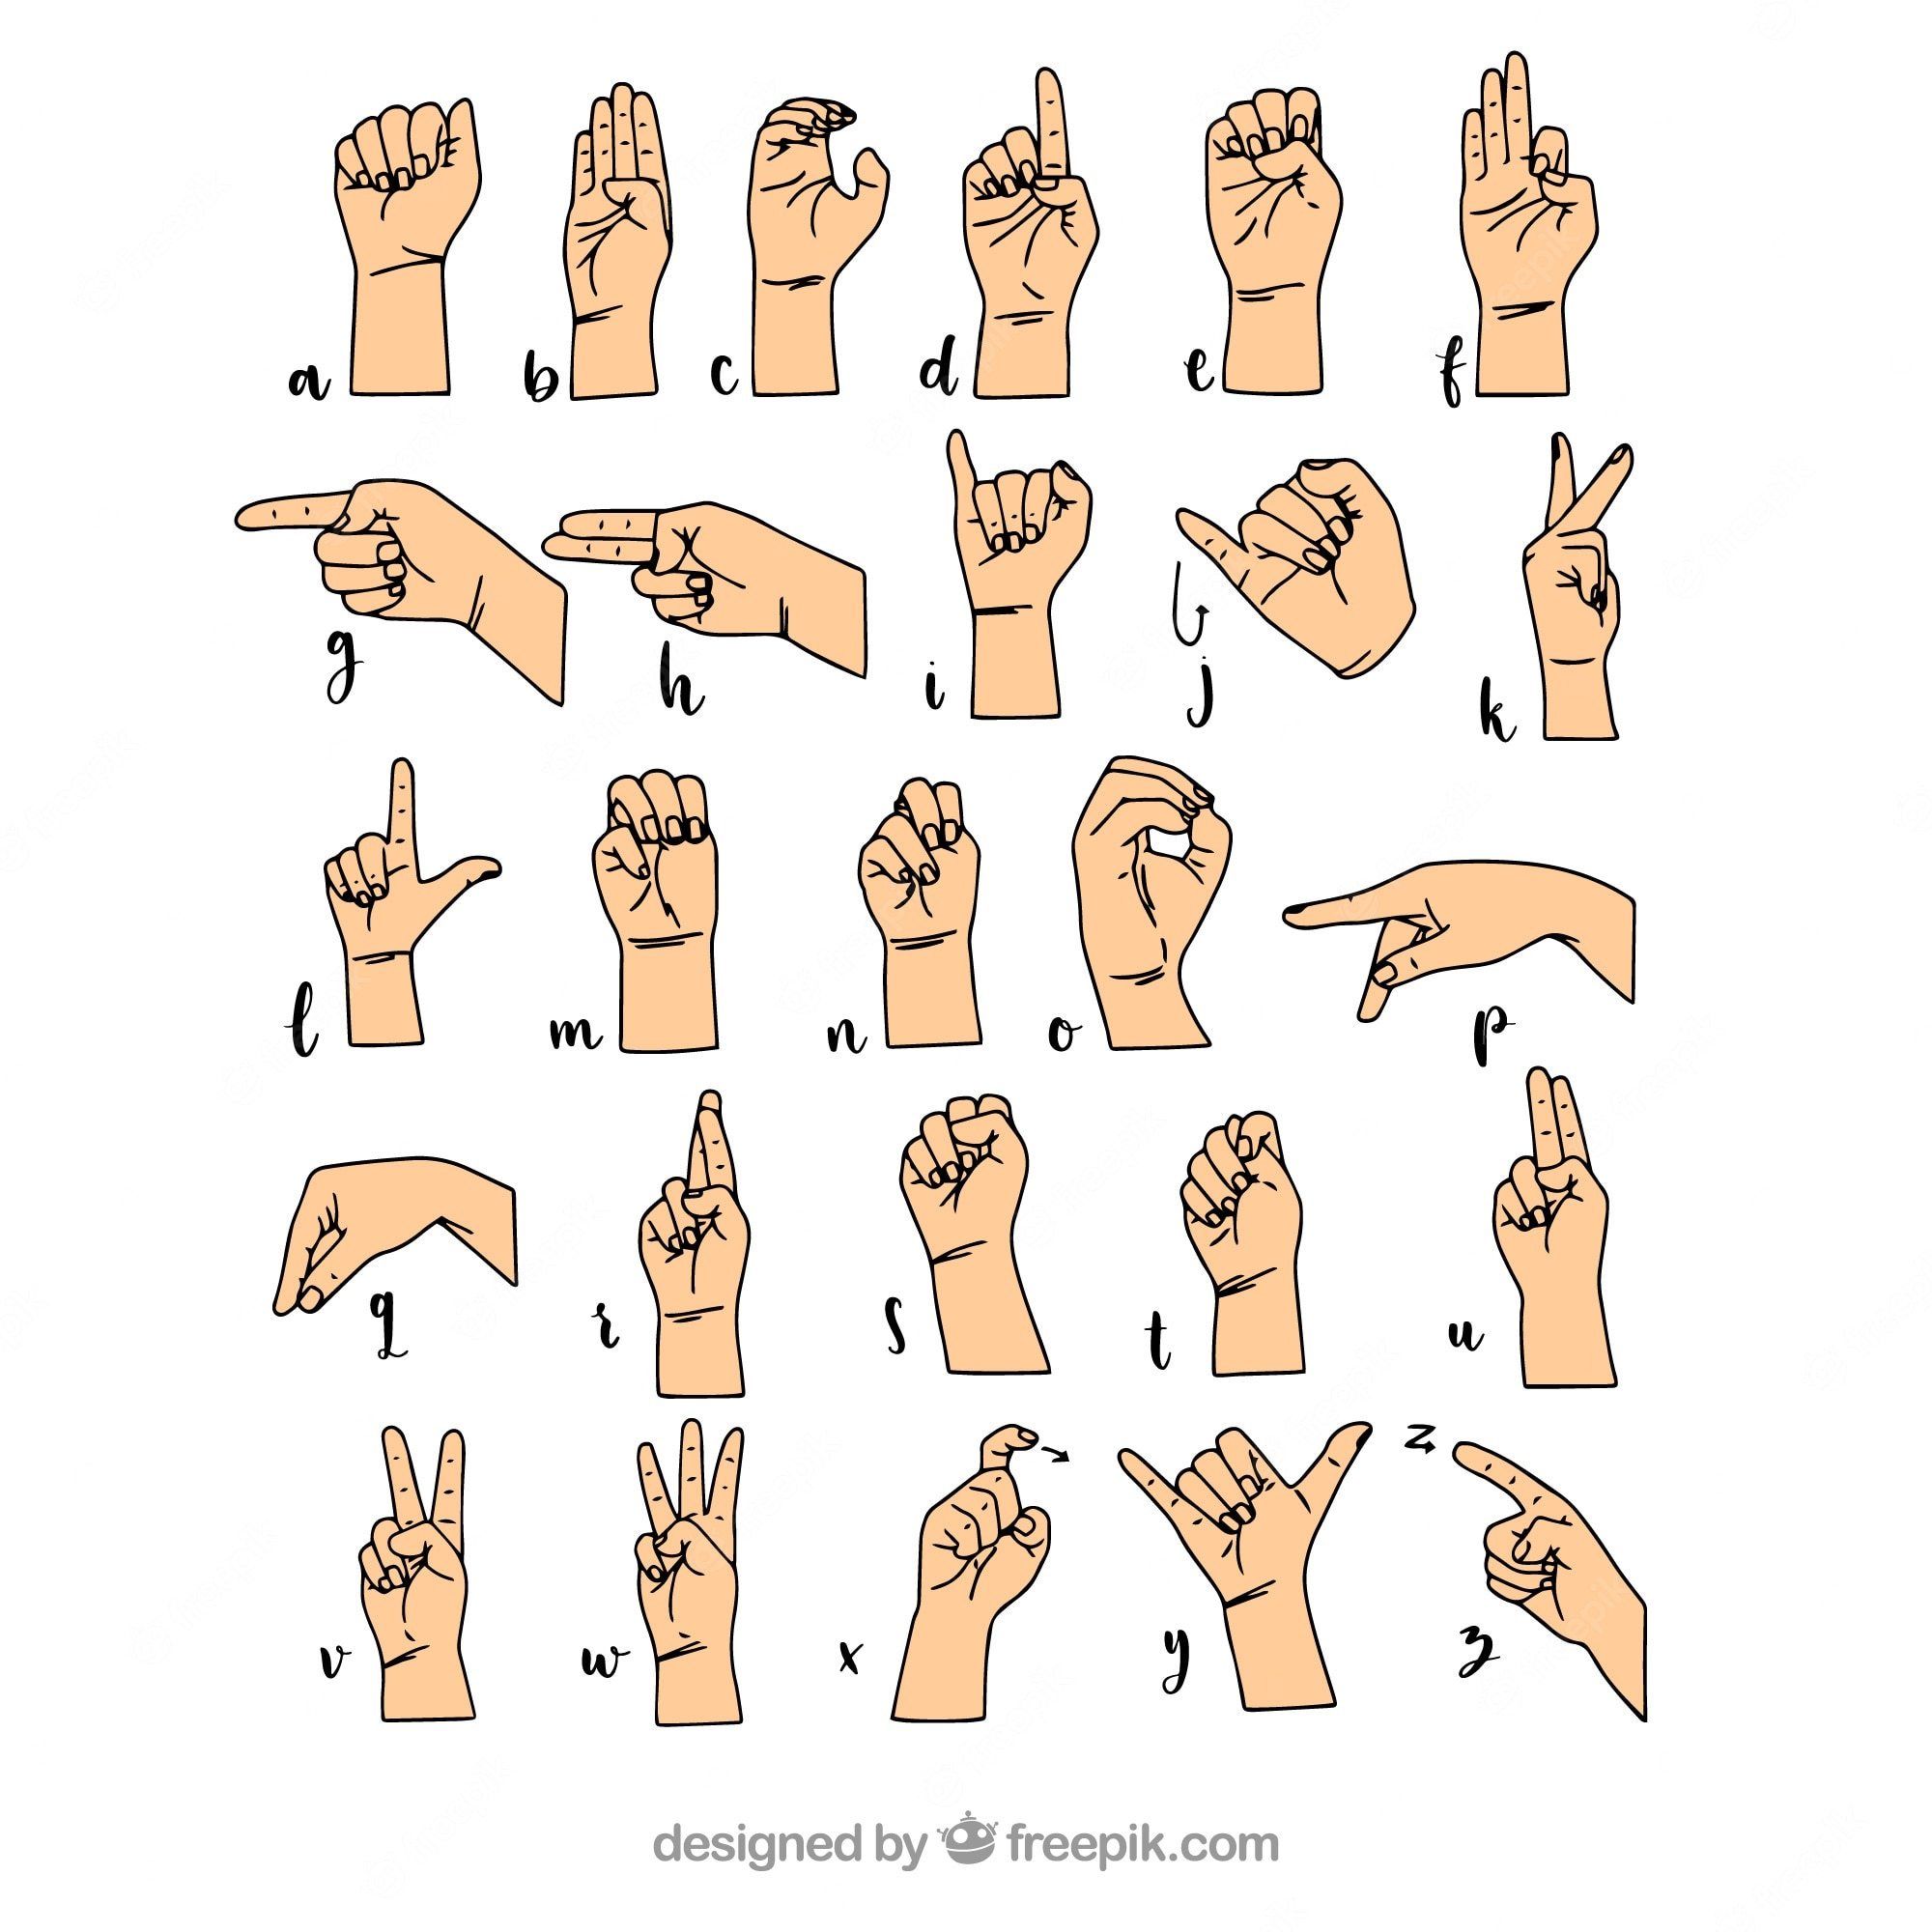 BSL (British Sign Language) - Class 7 - Quizizz